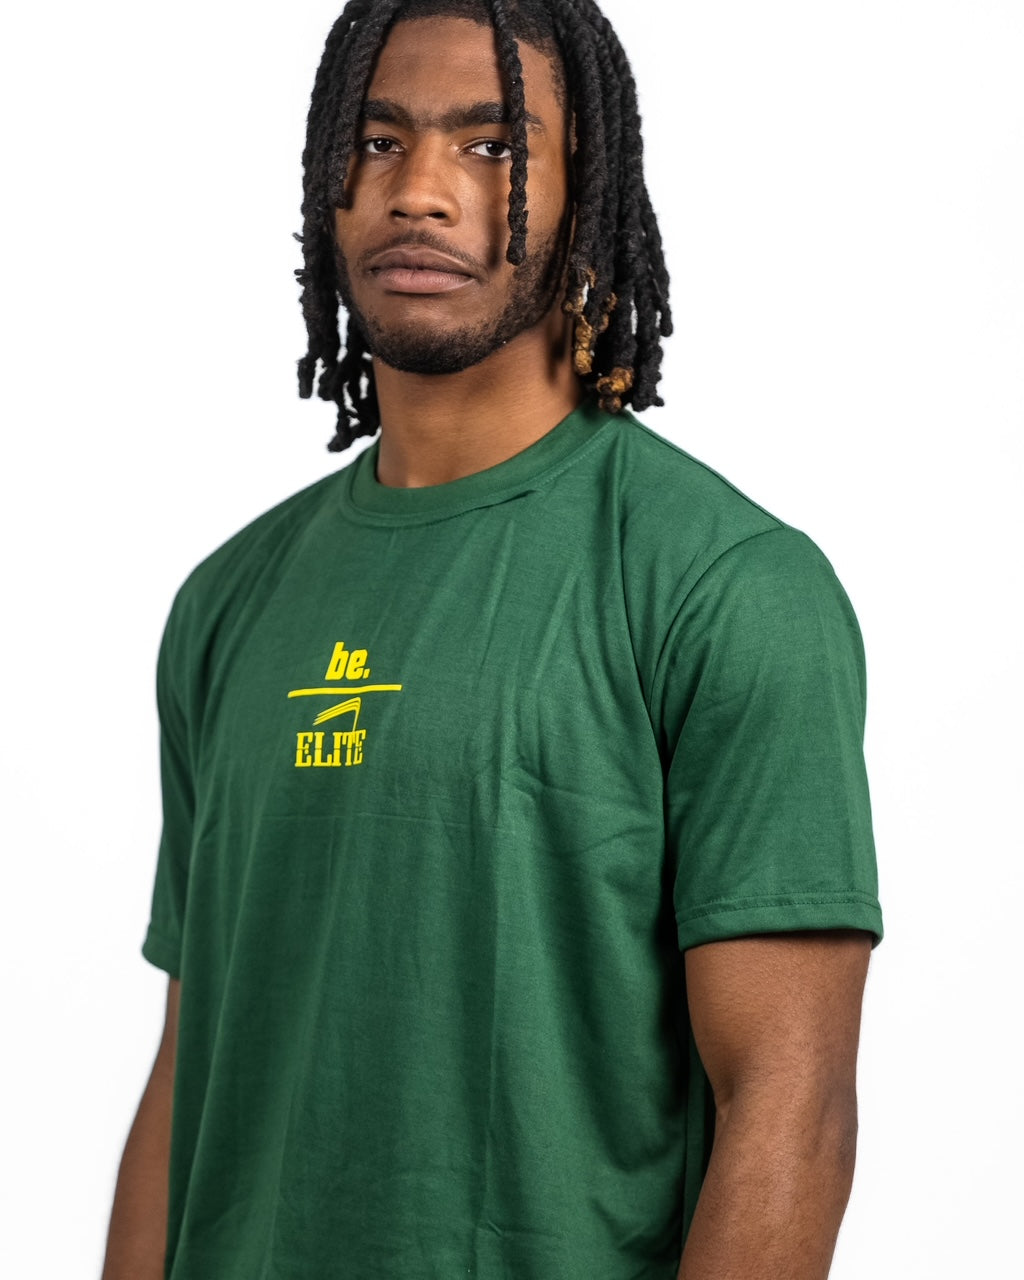 Be Elite Shirt - Green